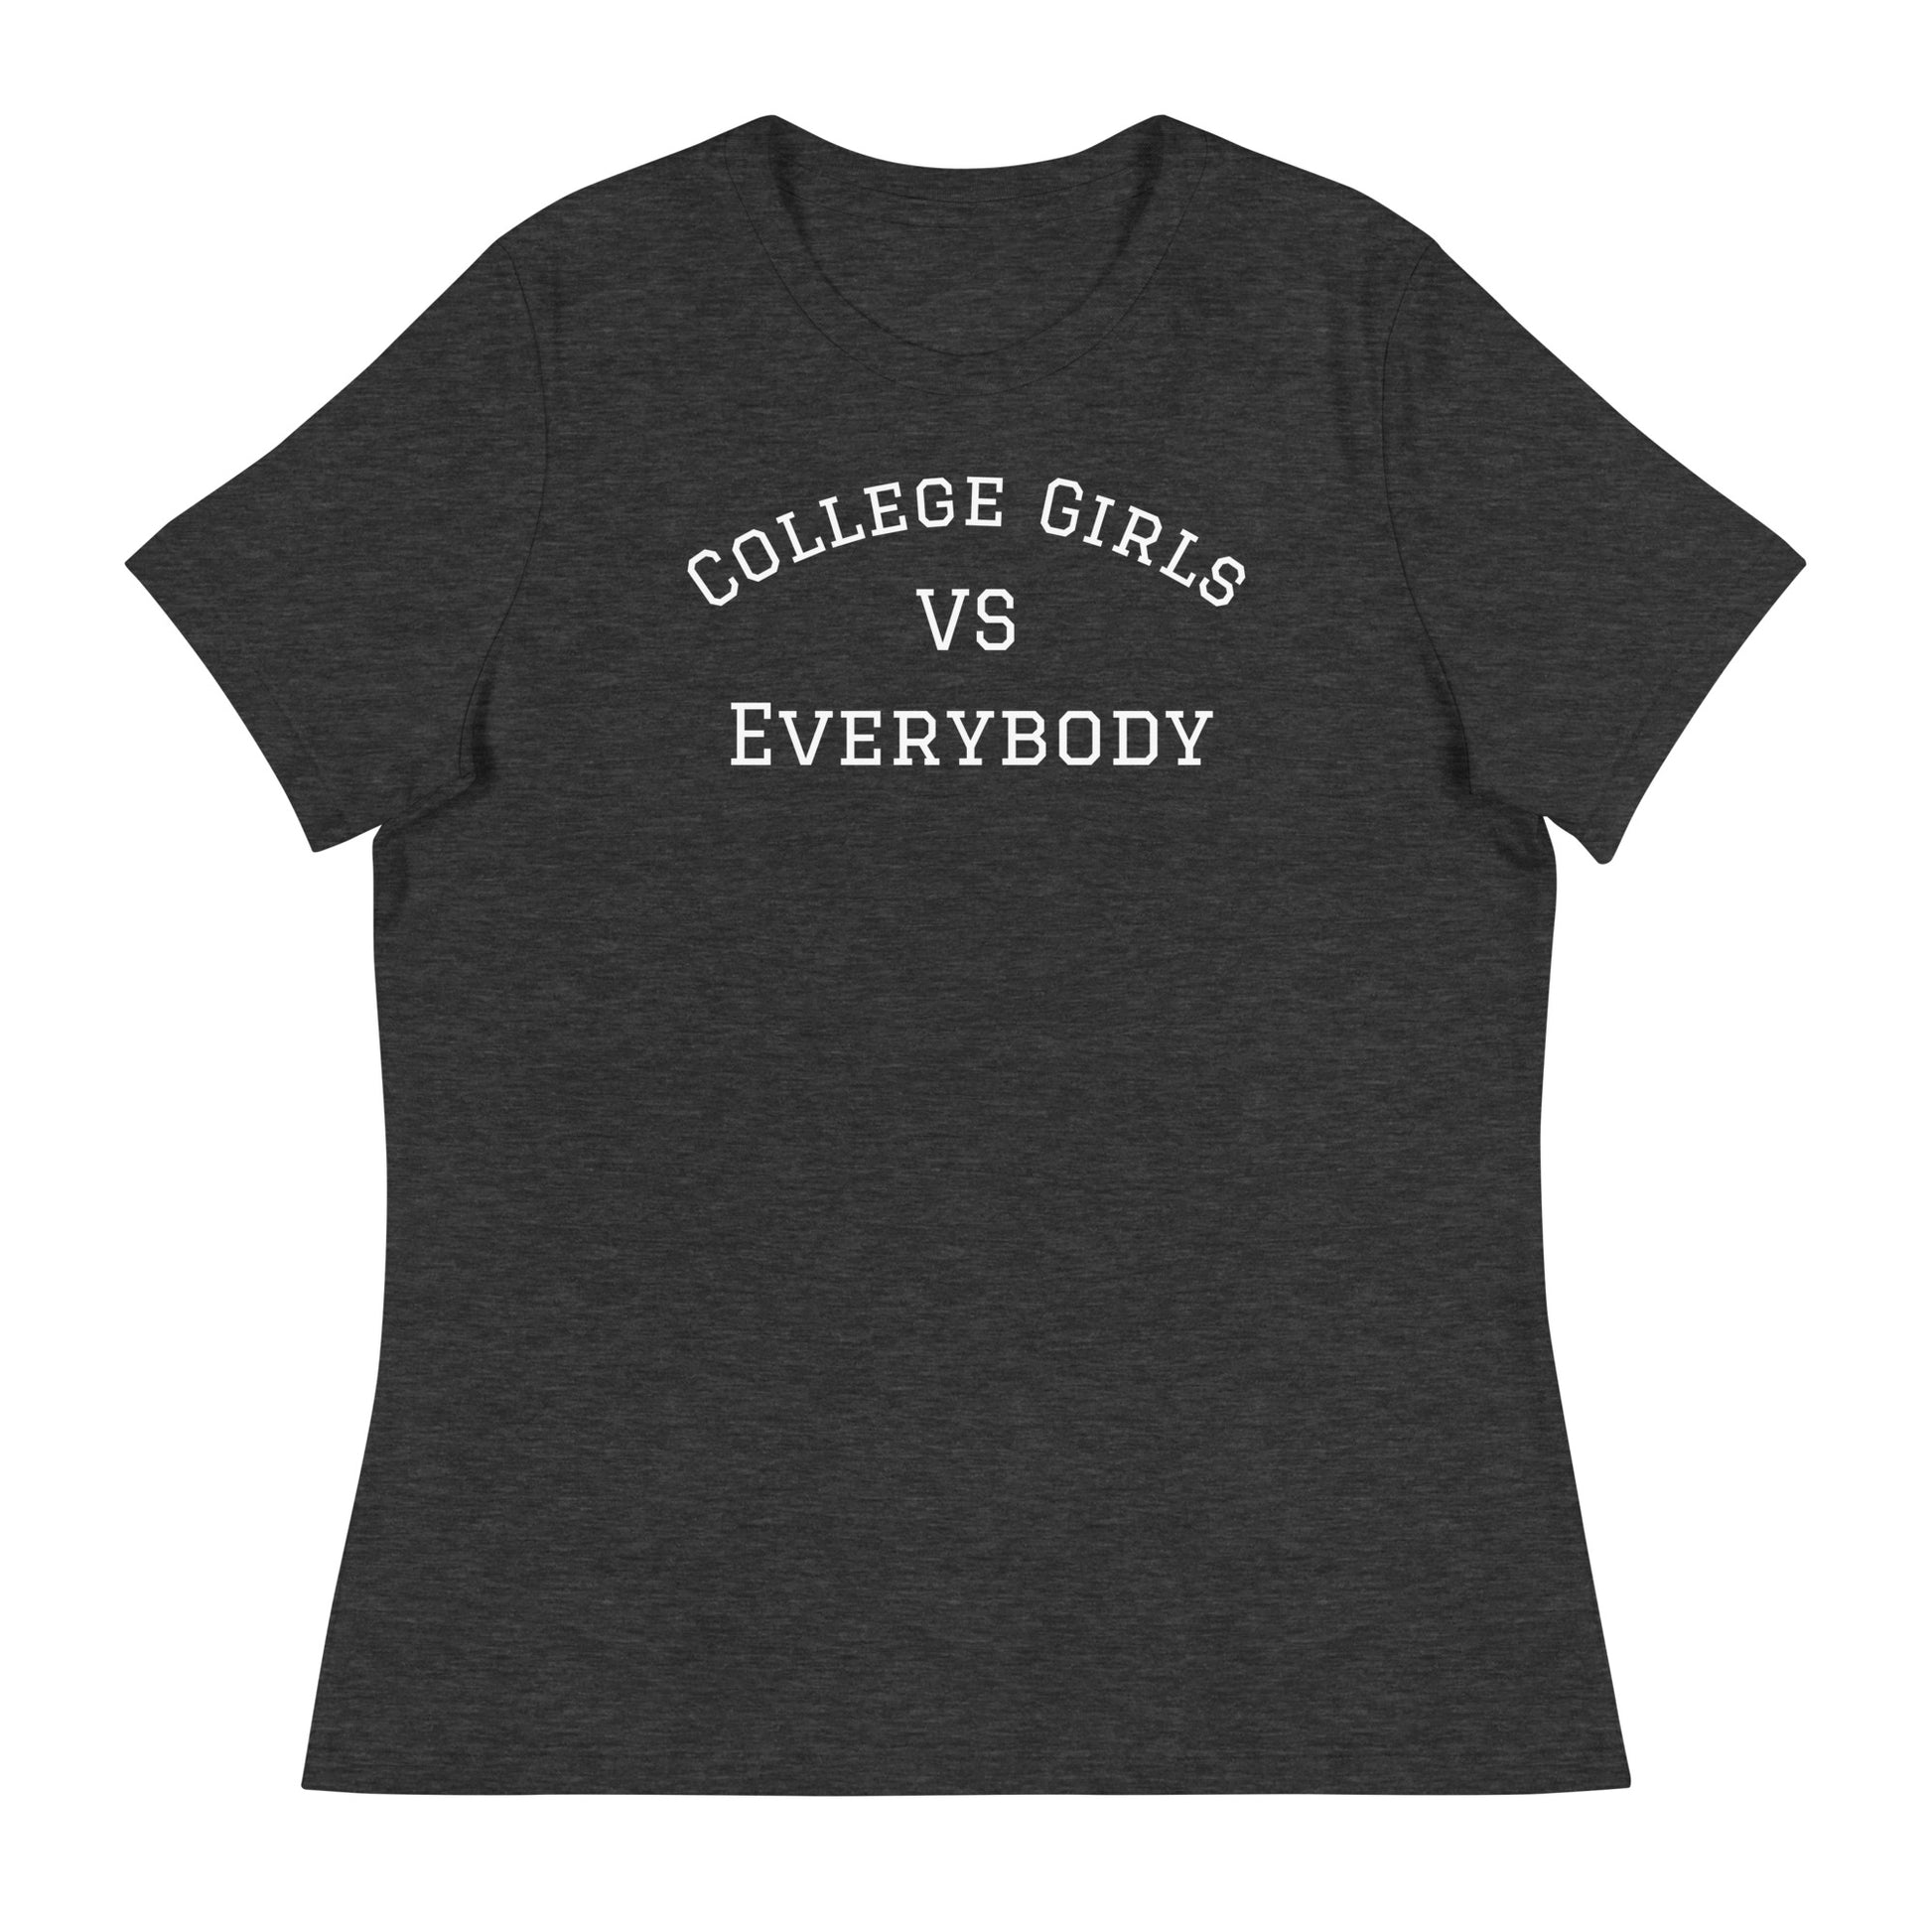 Best women's short sleeve college-casual black tee shirt that celebrates college girls